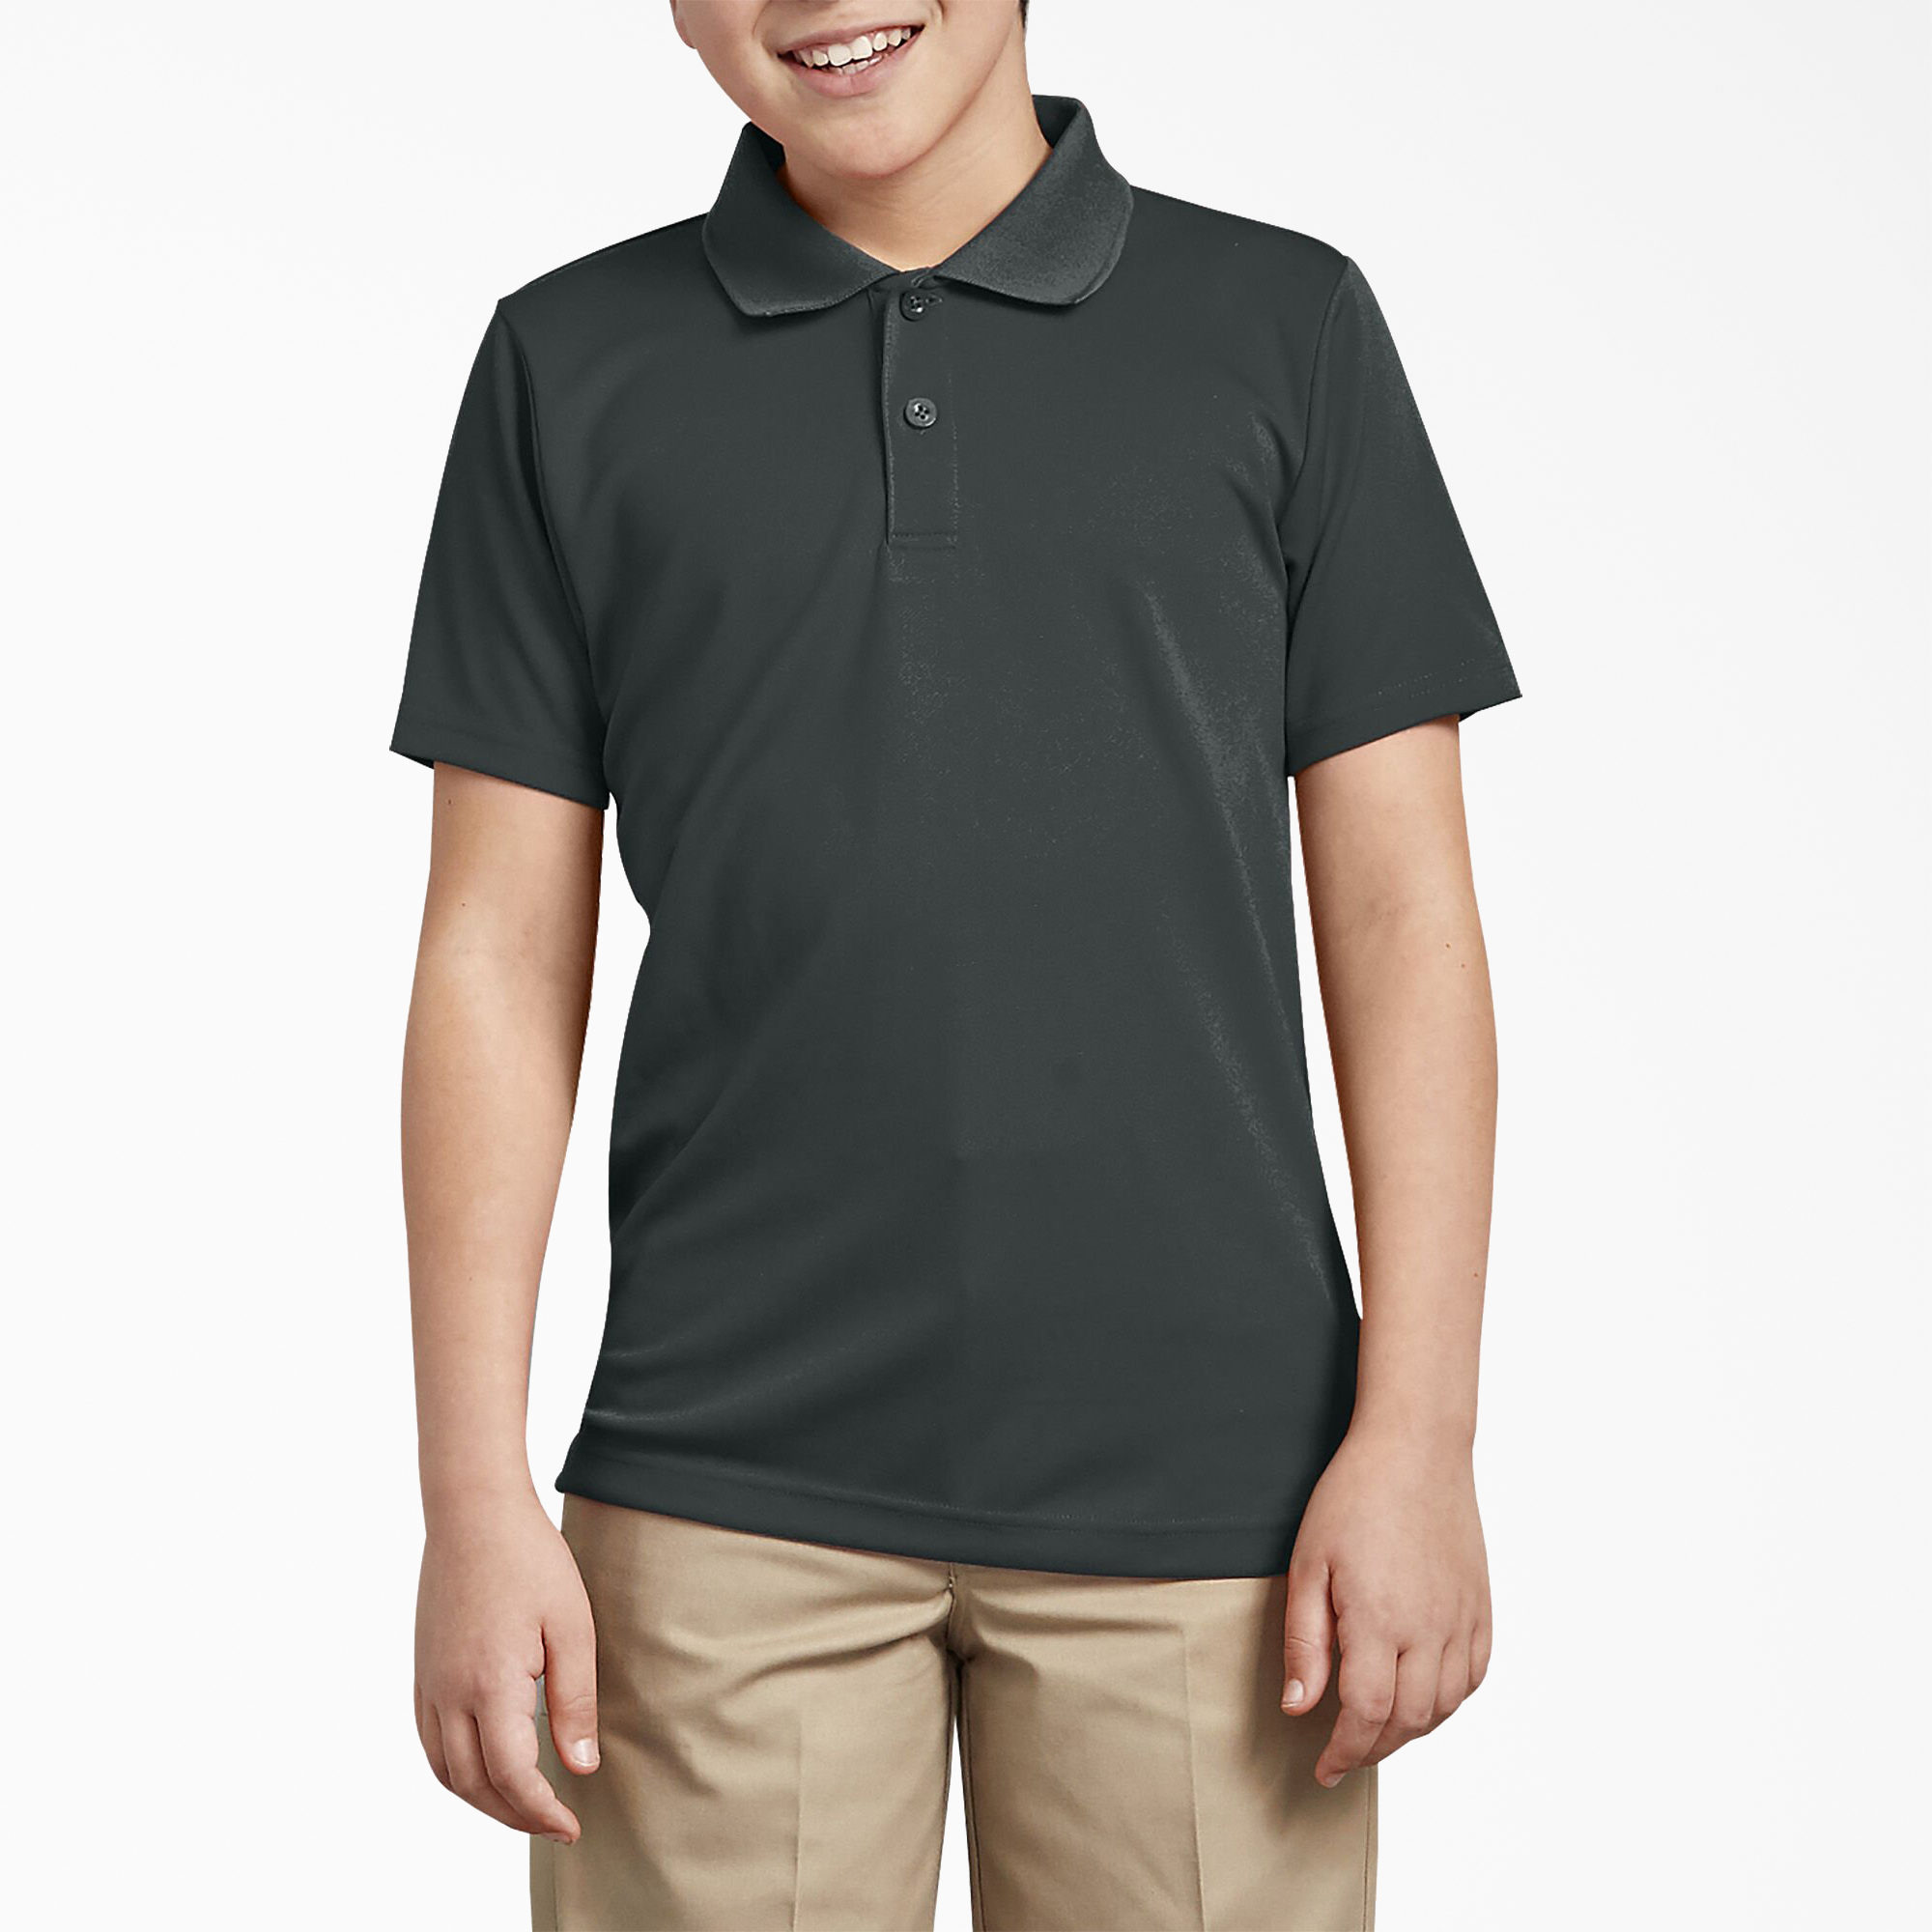 Boys' School Uniforms - Polo Shirts, Pants & Button Ups, Blue, Green, White  Size M, L, XL, 2T, 4T | Dickies